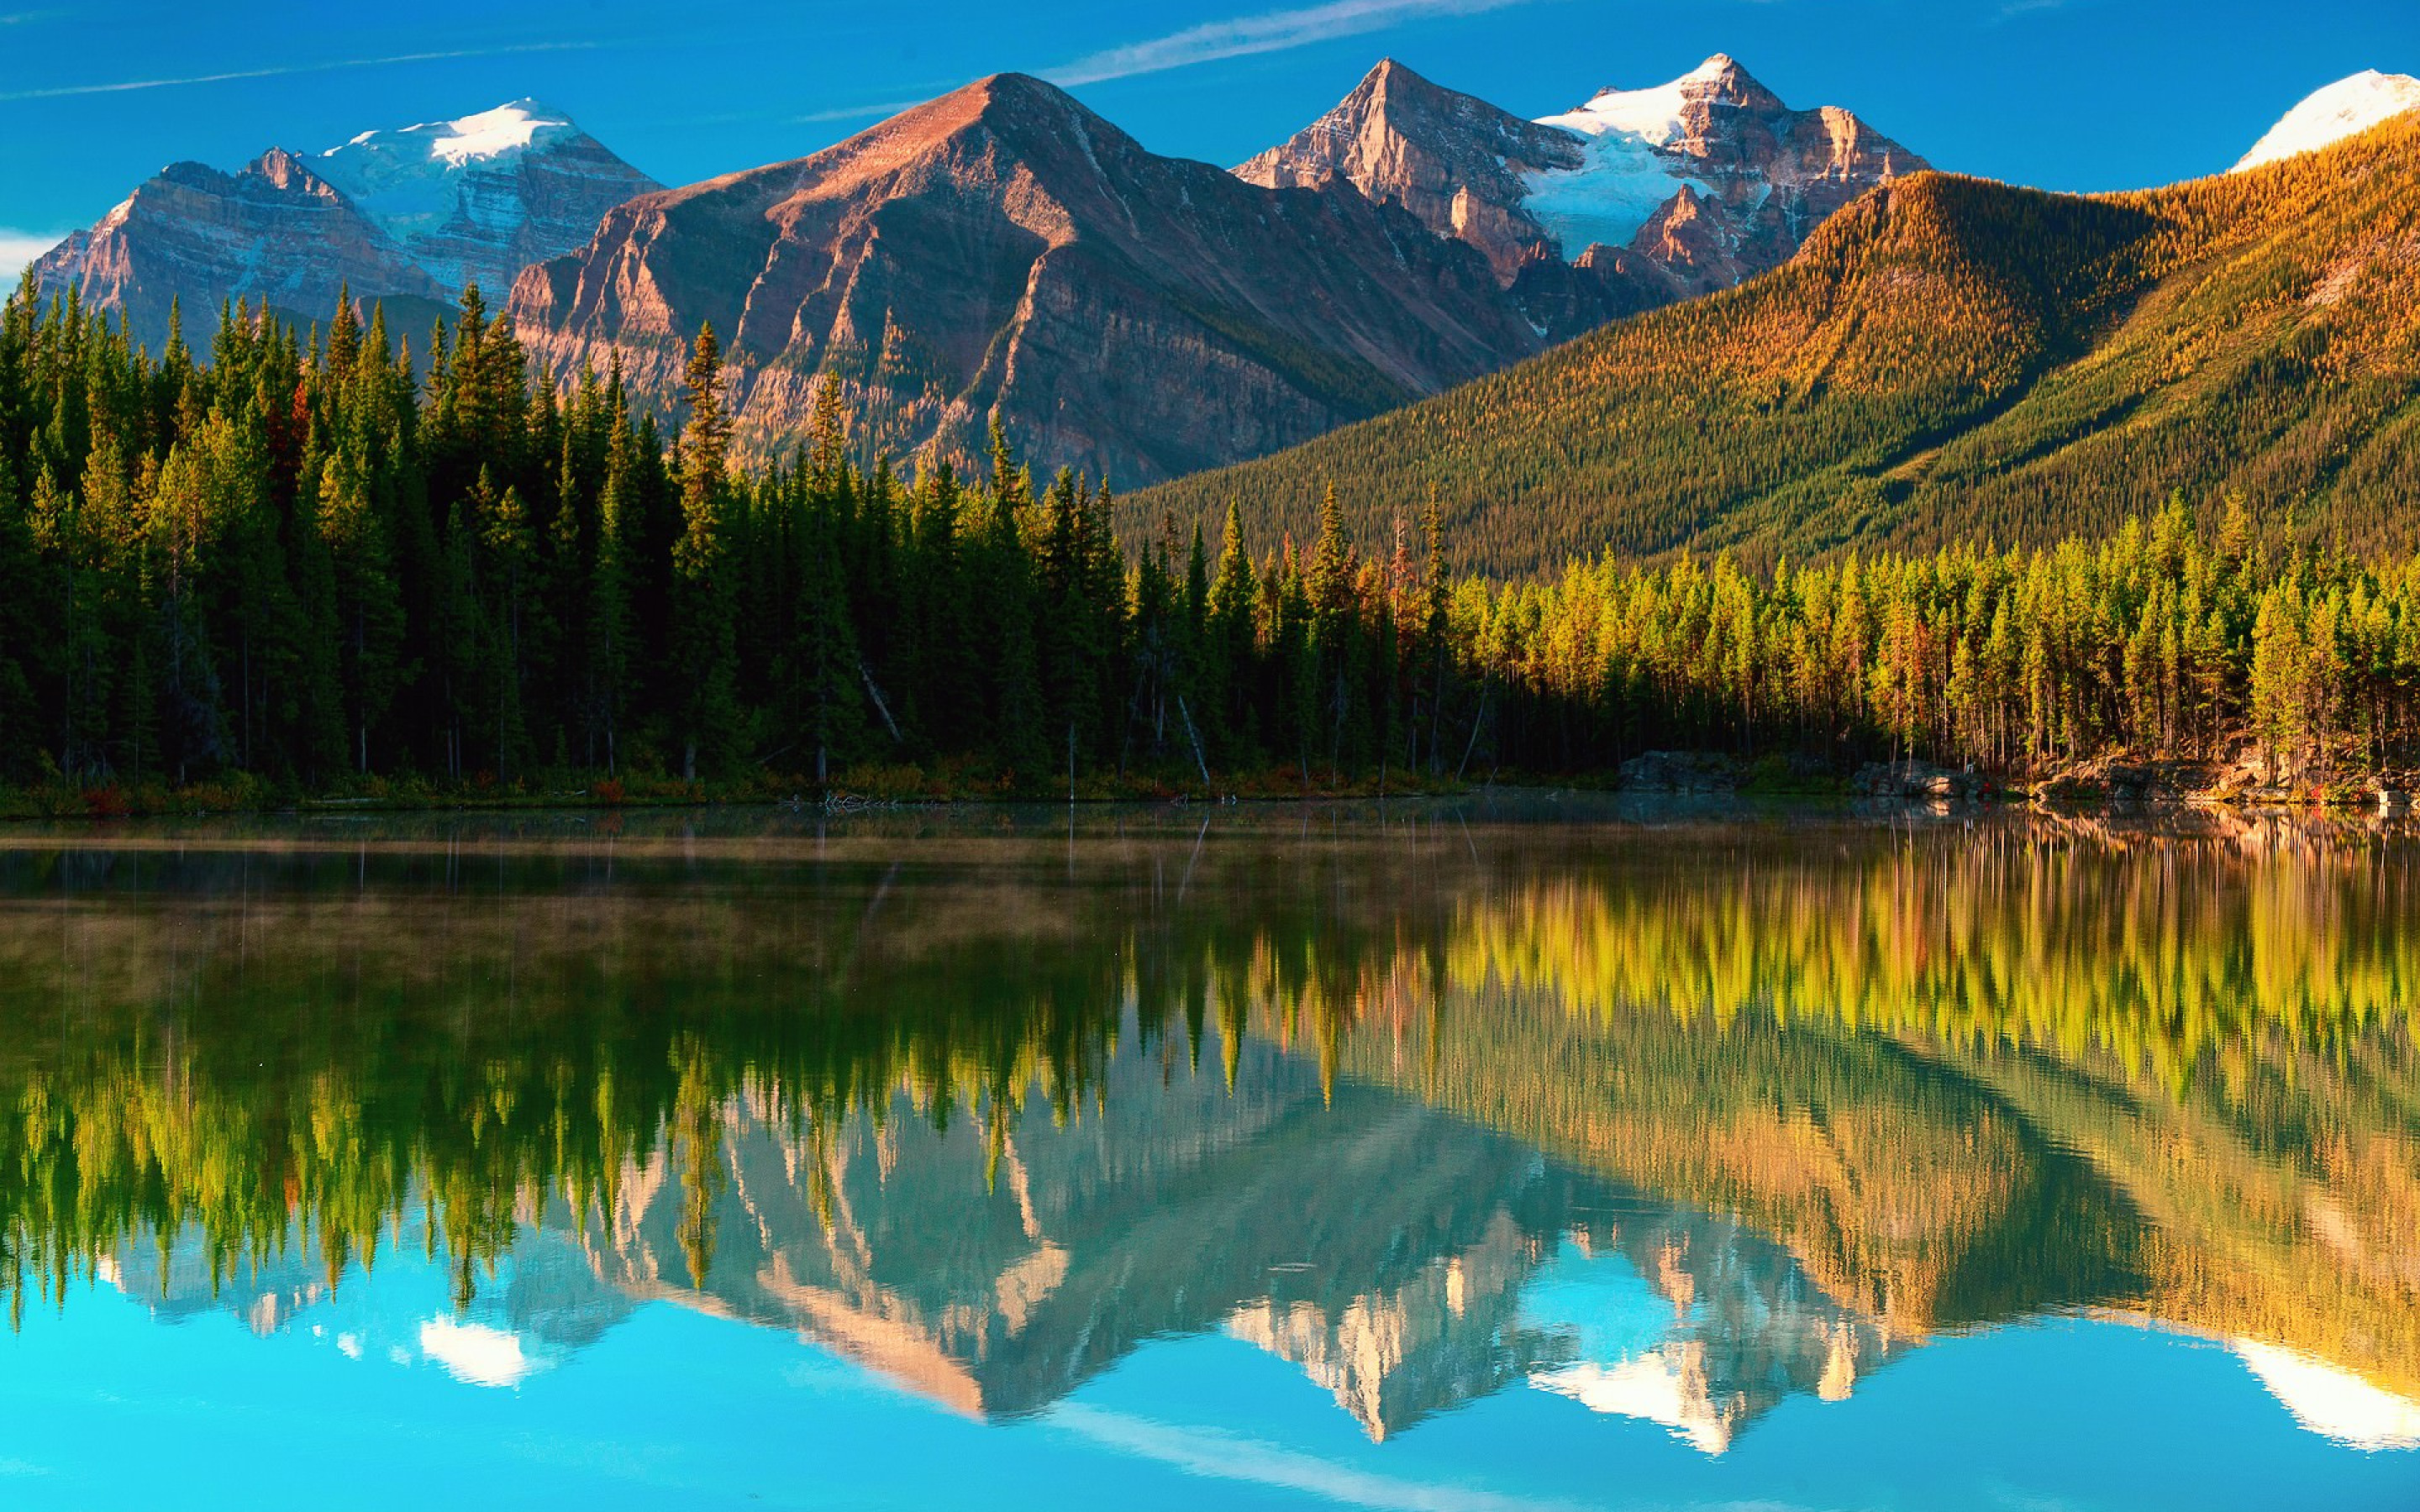 Canada lakes. Озеро Маккей Канада. Заповедник Банф Канада. Канада природа озера лес горы. Озеро Морейн.